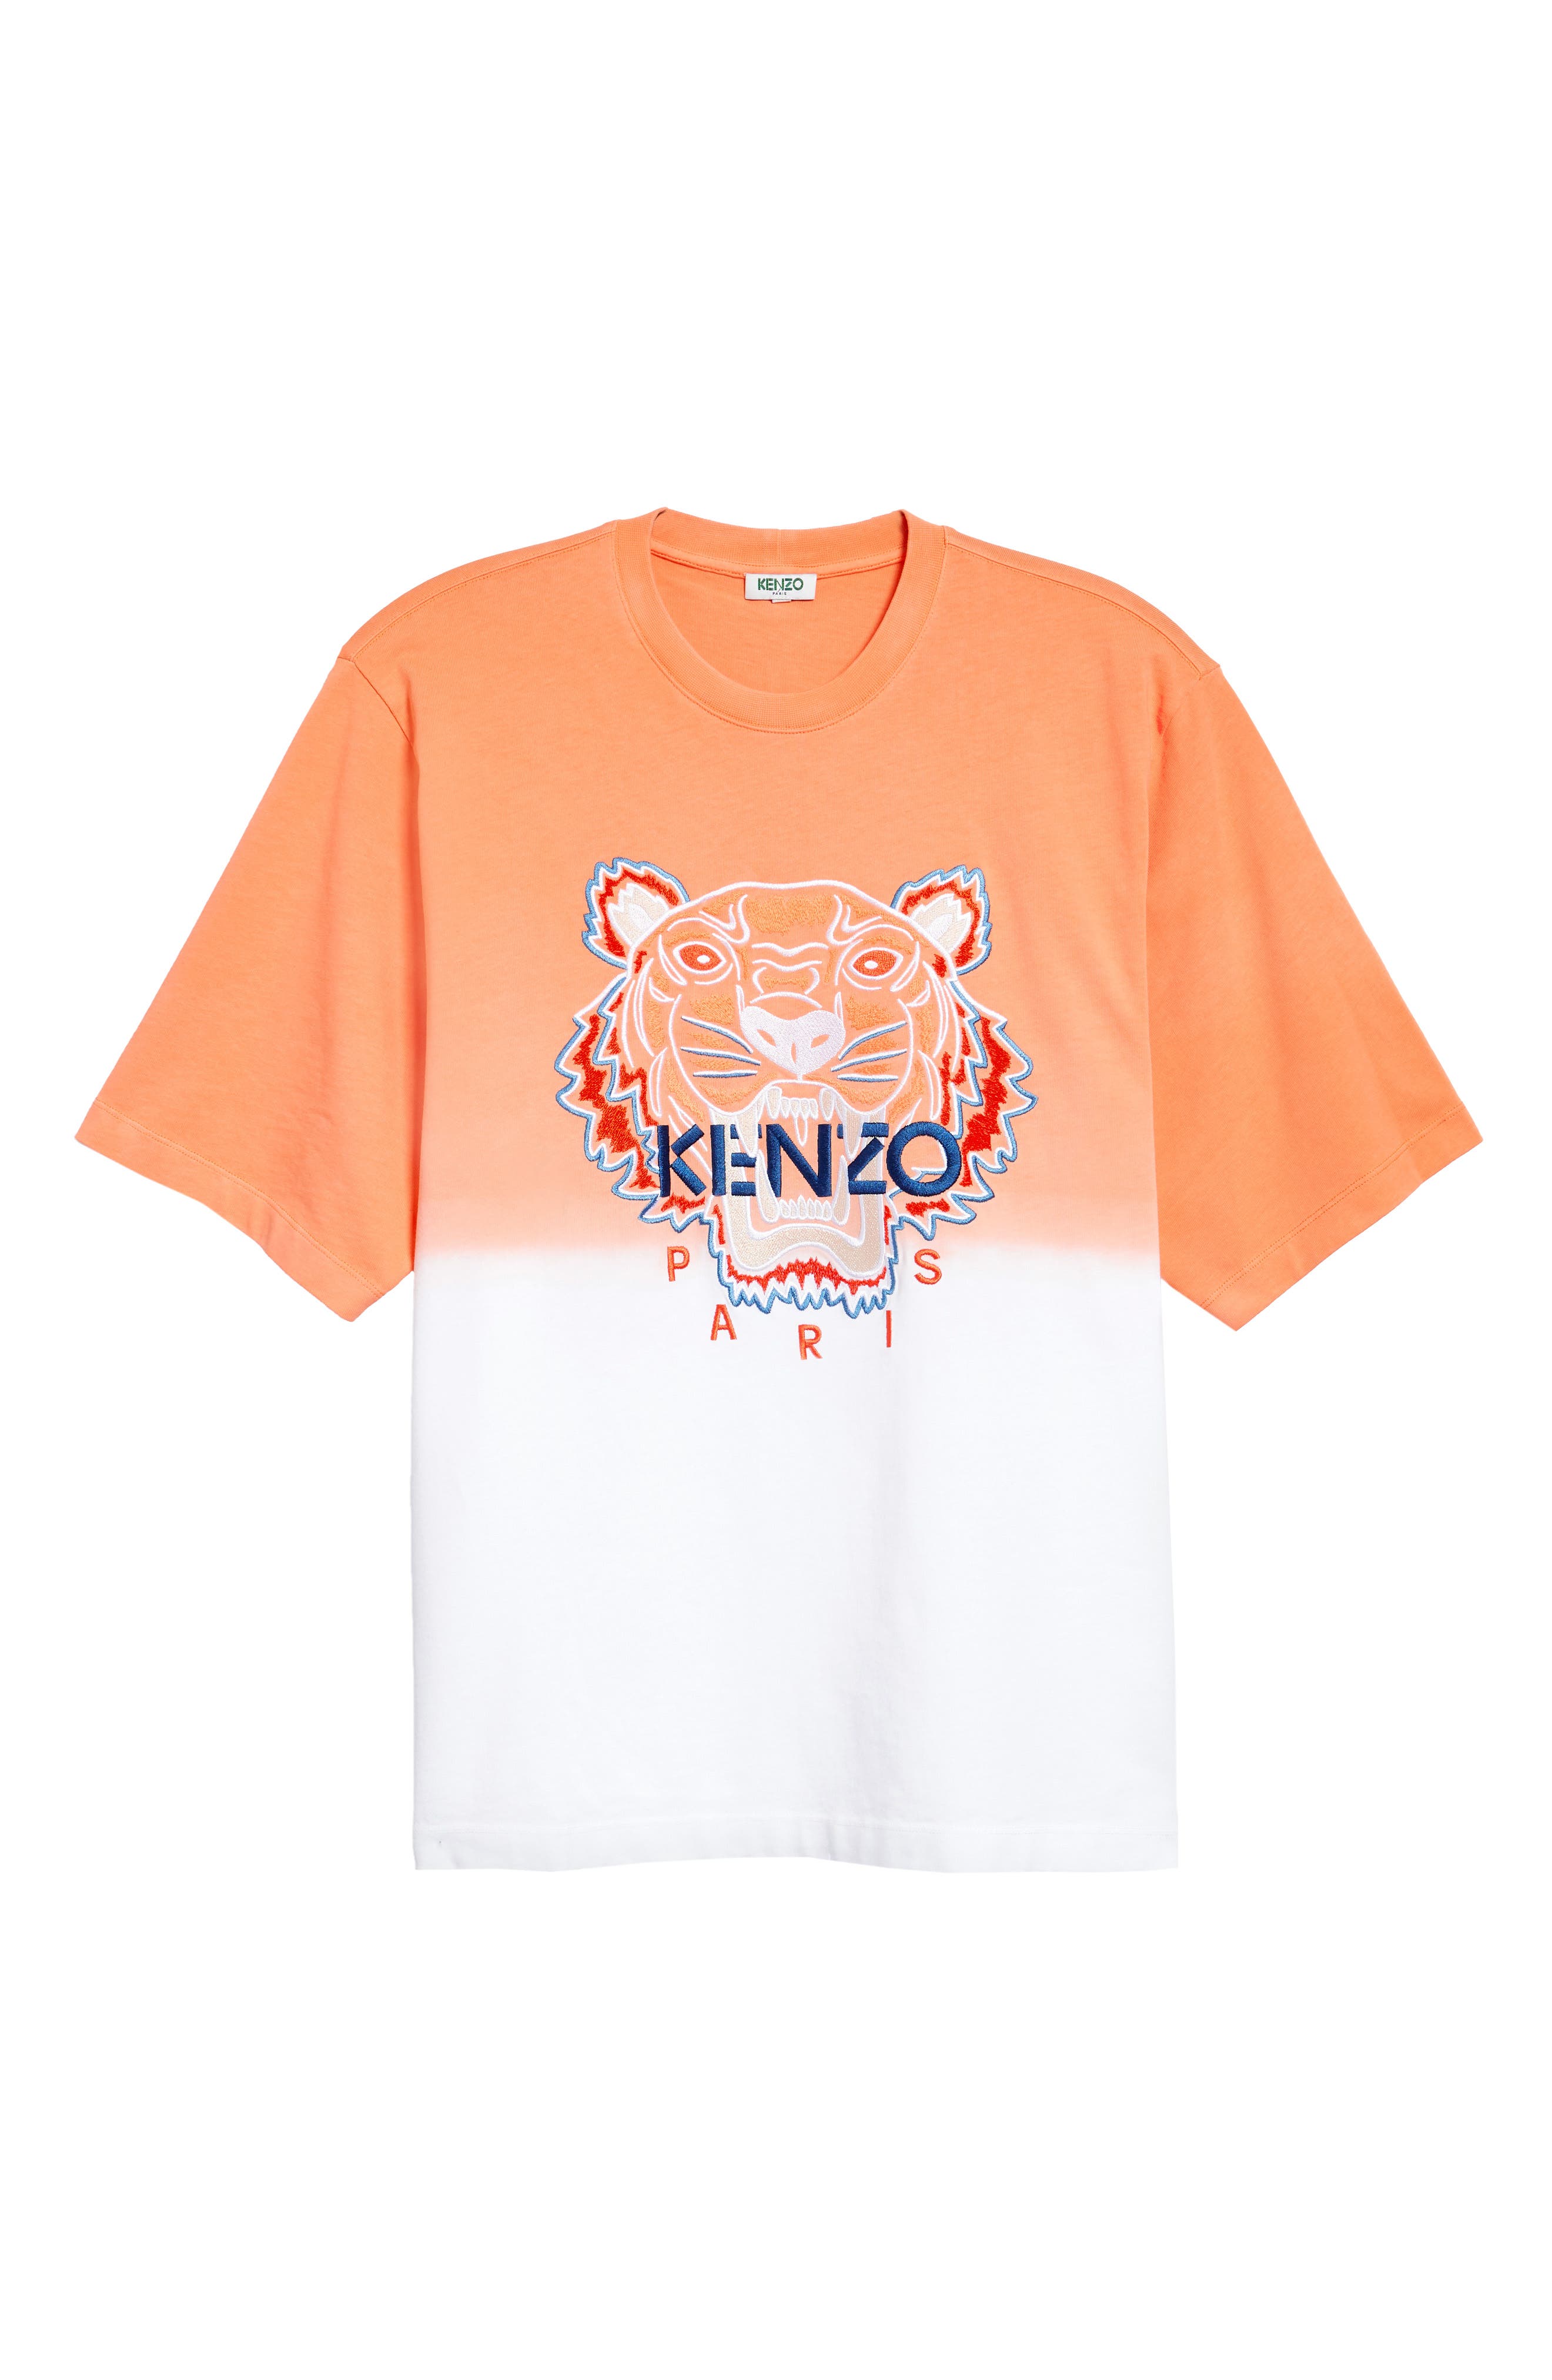 kenzo canada online